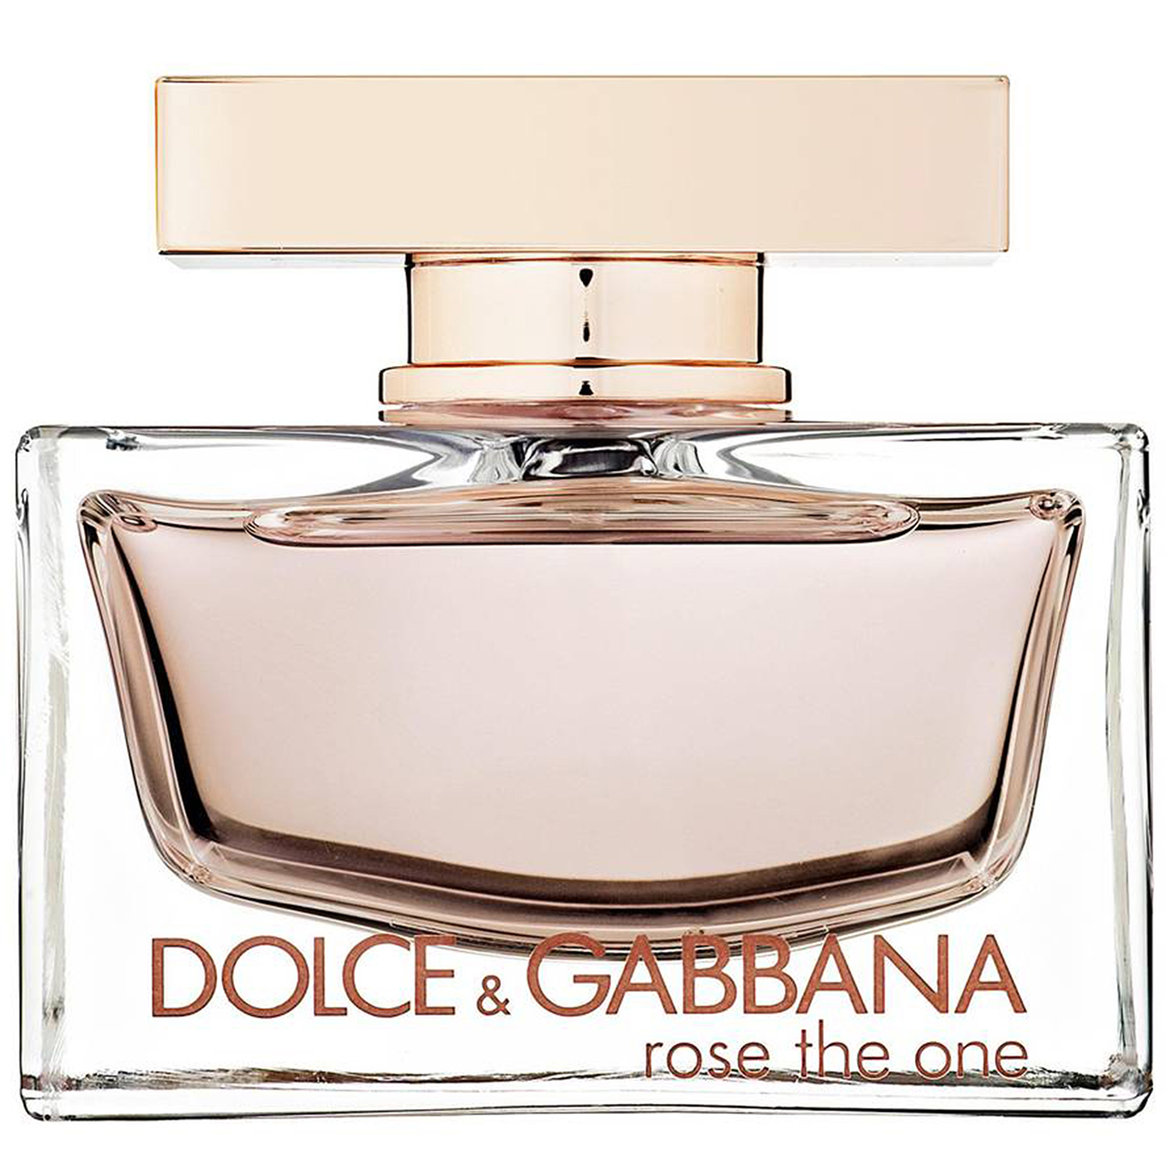 dolce & gabbana rose the one perfume